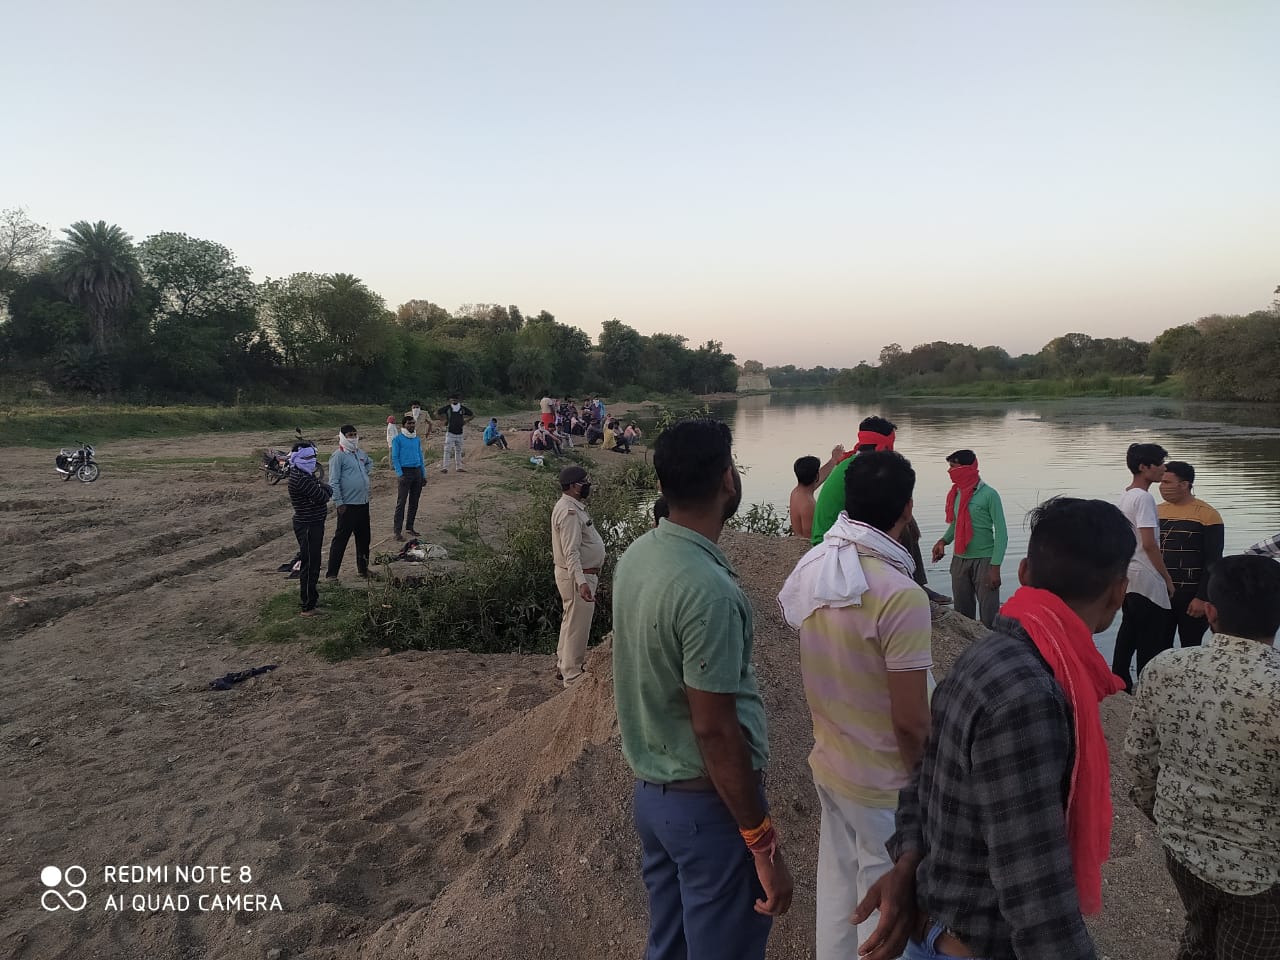  काफी देर बाद पुलिस व गोताखोरों ने लाश बरामद की  A youth going into kinship landed in the river, drowned, news in hindi, mp news, datia news